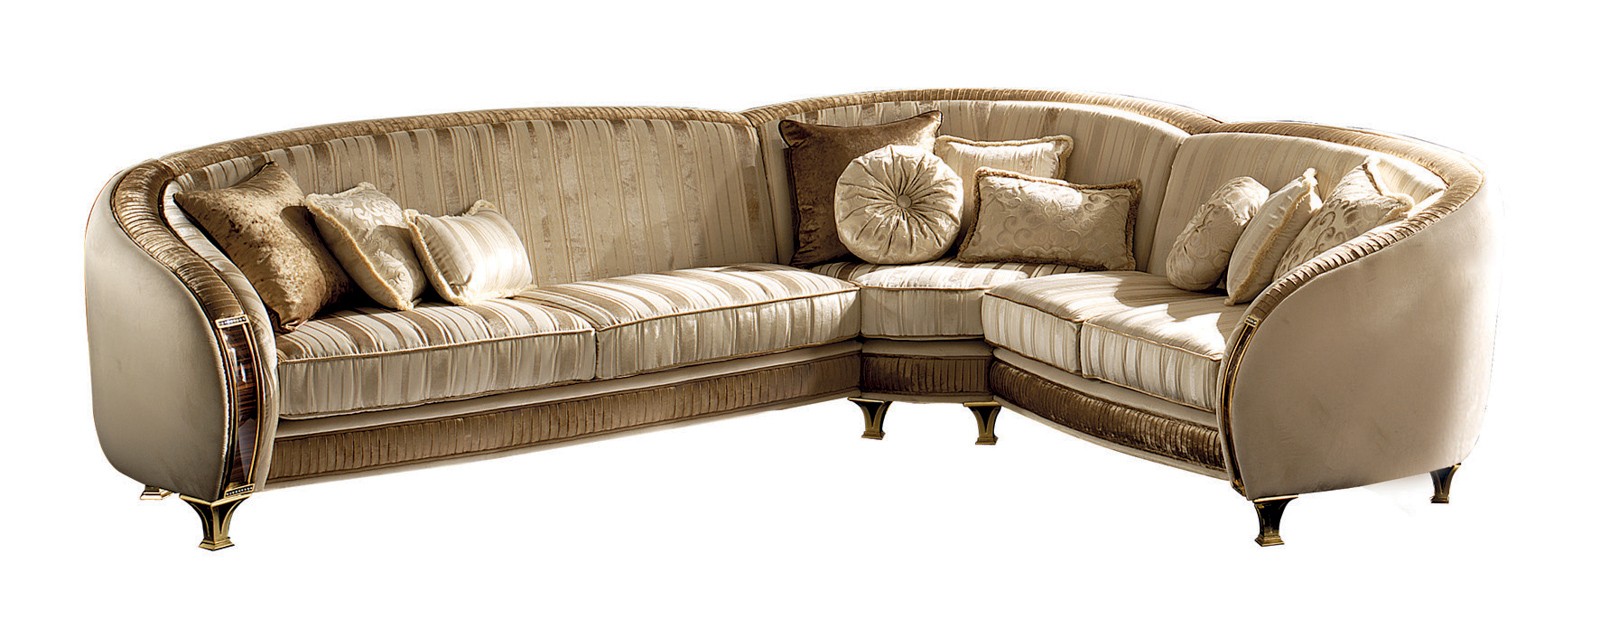 3 seat sofa without arms milano italian furniture